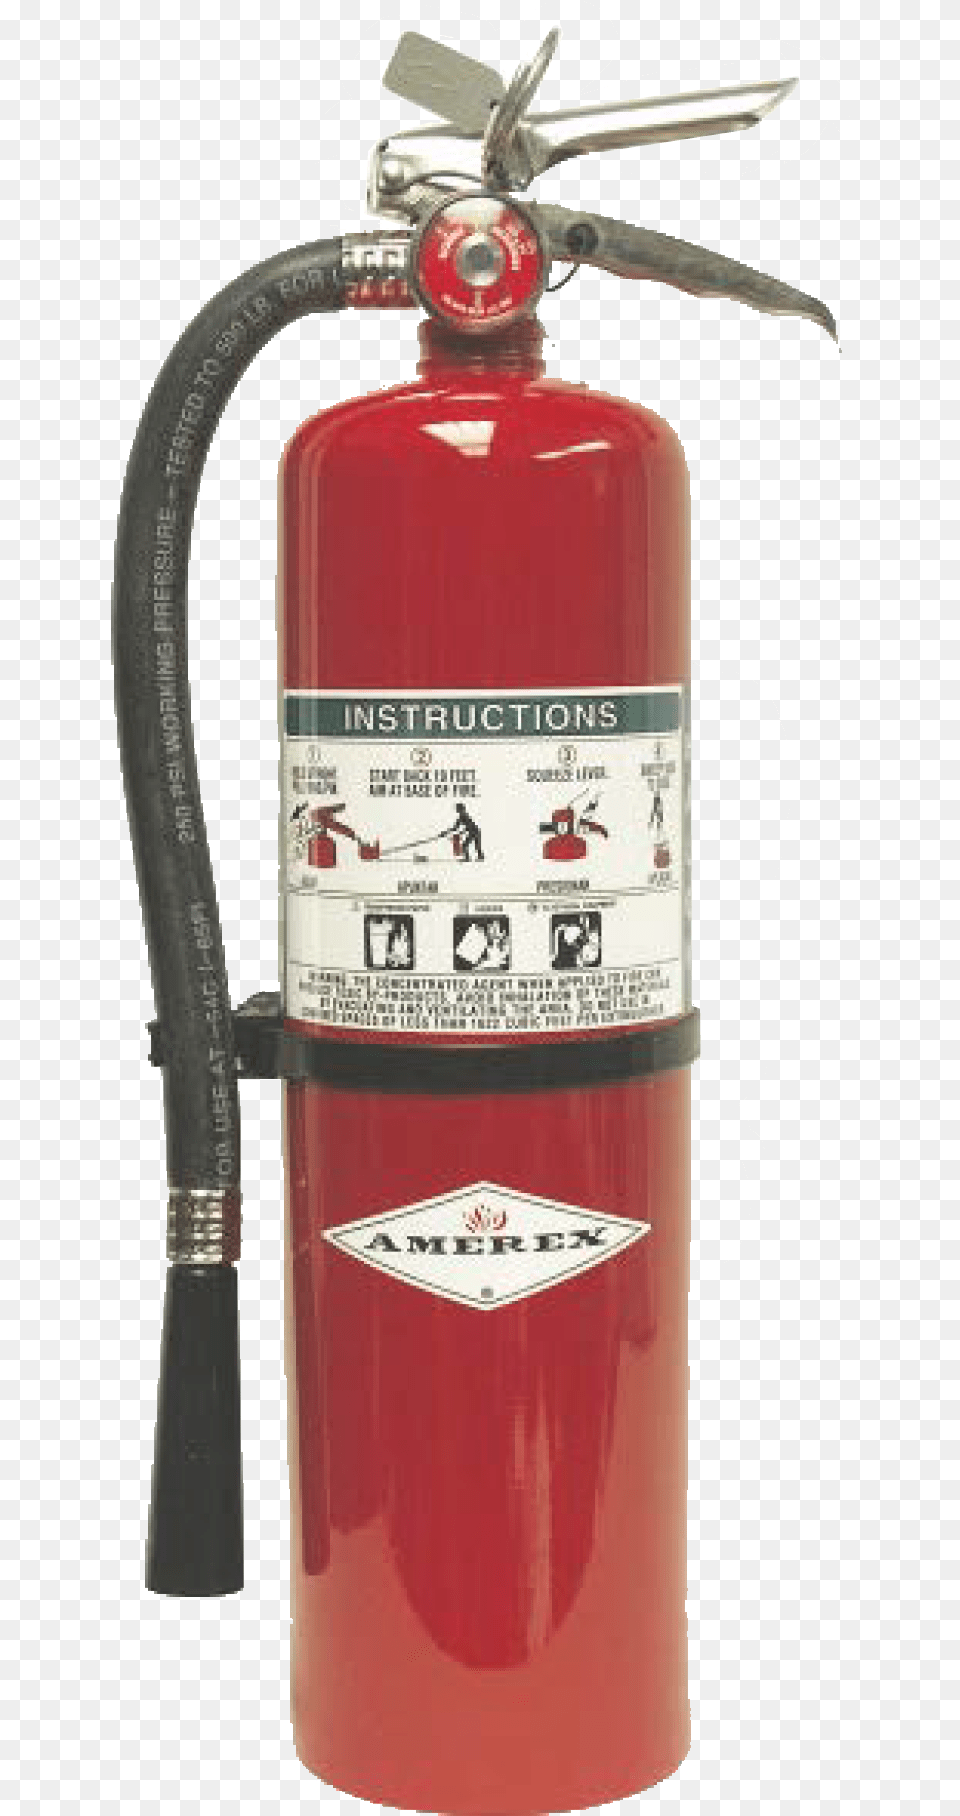 Amerex Halon Fire Extinguishers Halon Fire Extinguisher, Cylinder, Gas Pump, Machine, Pump Free Png Download